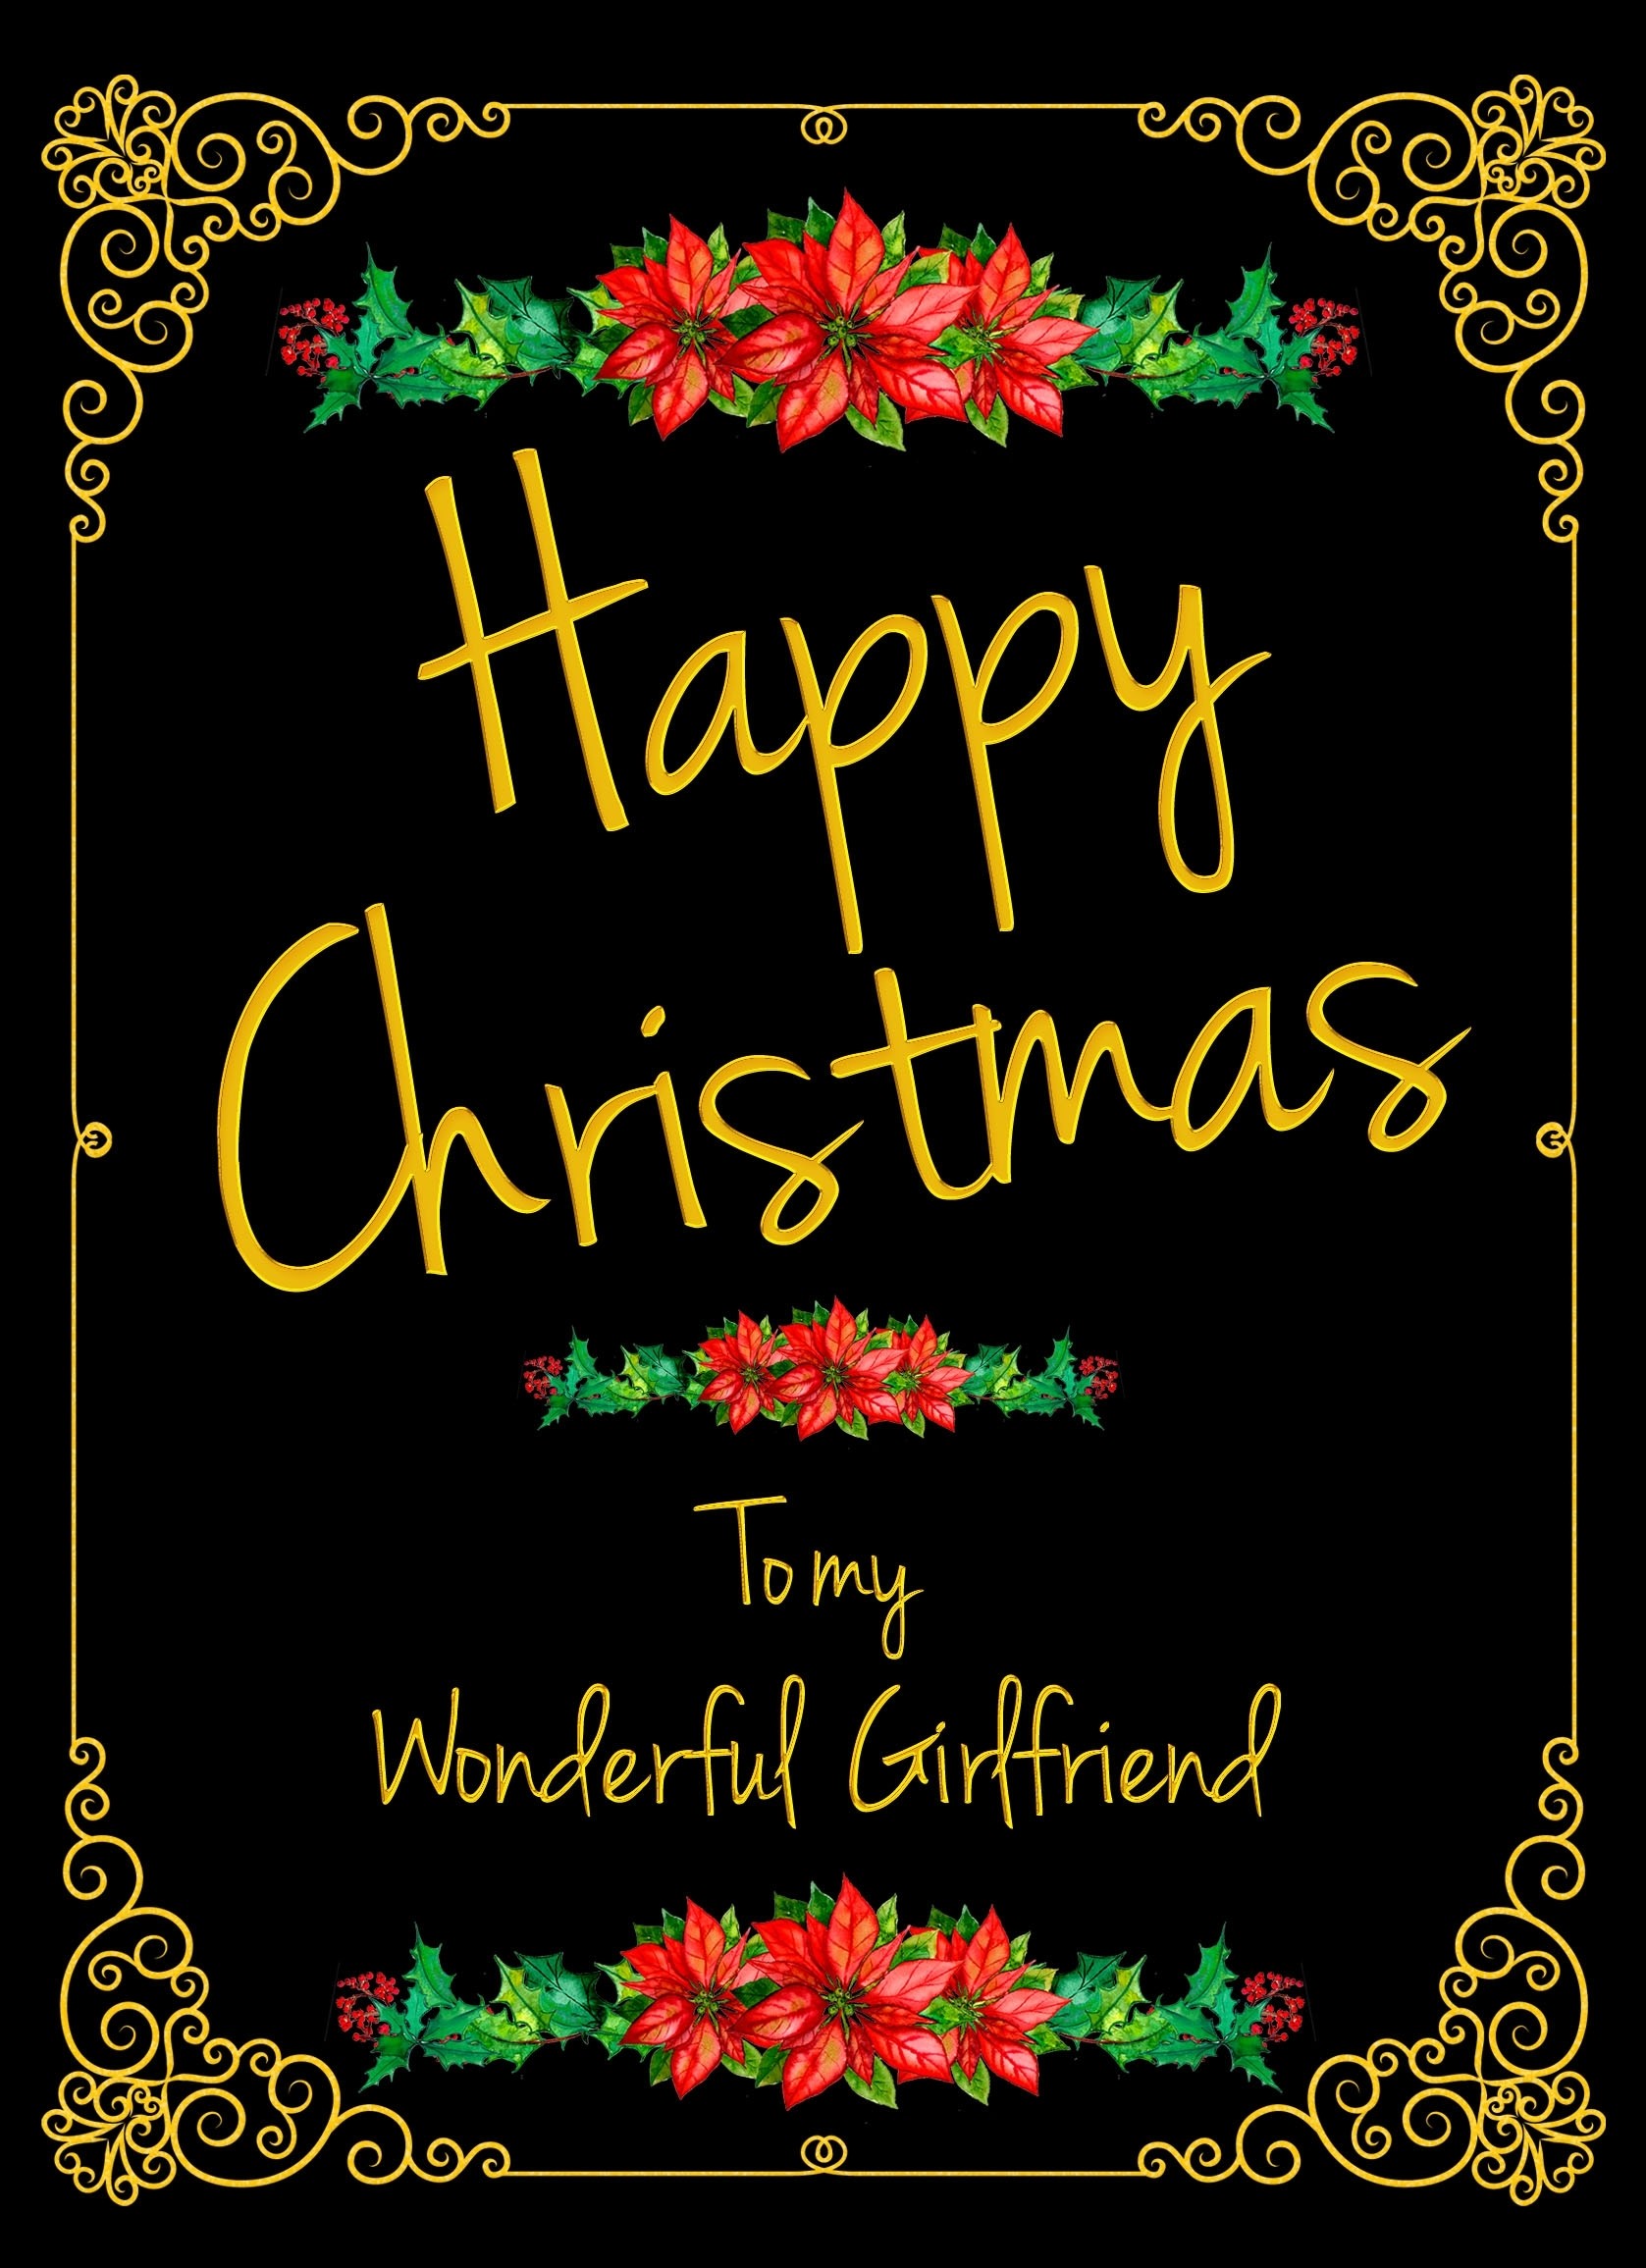 Christmas Card For Girlfriend (Wonderful)